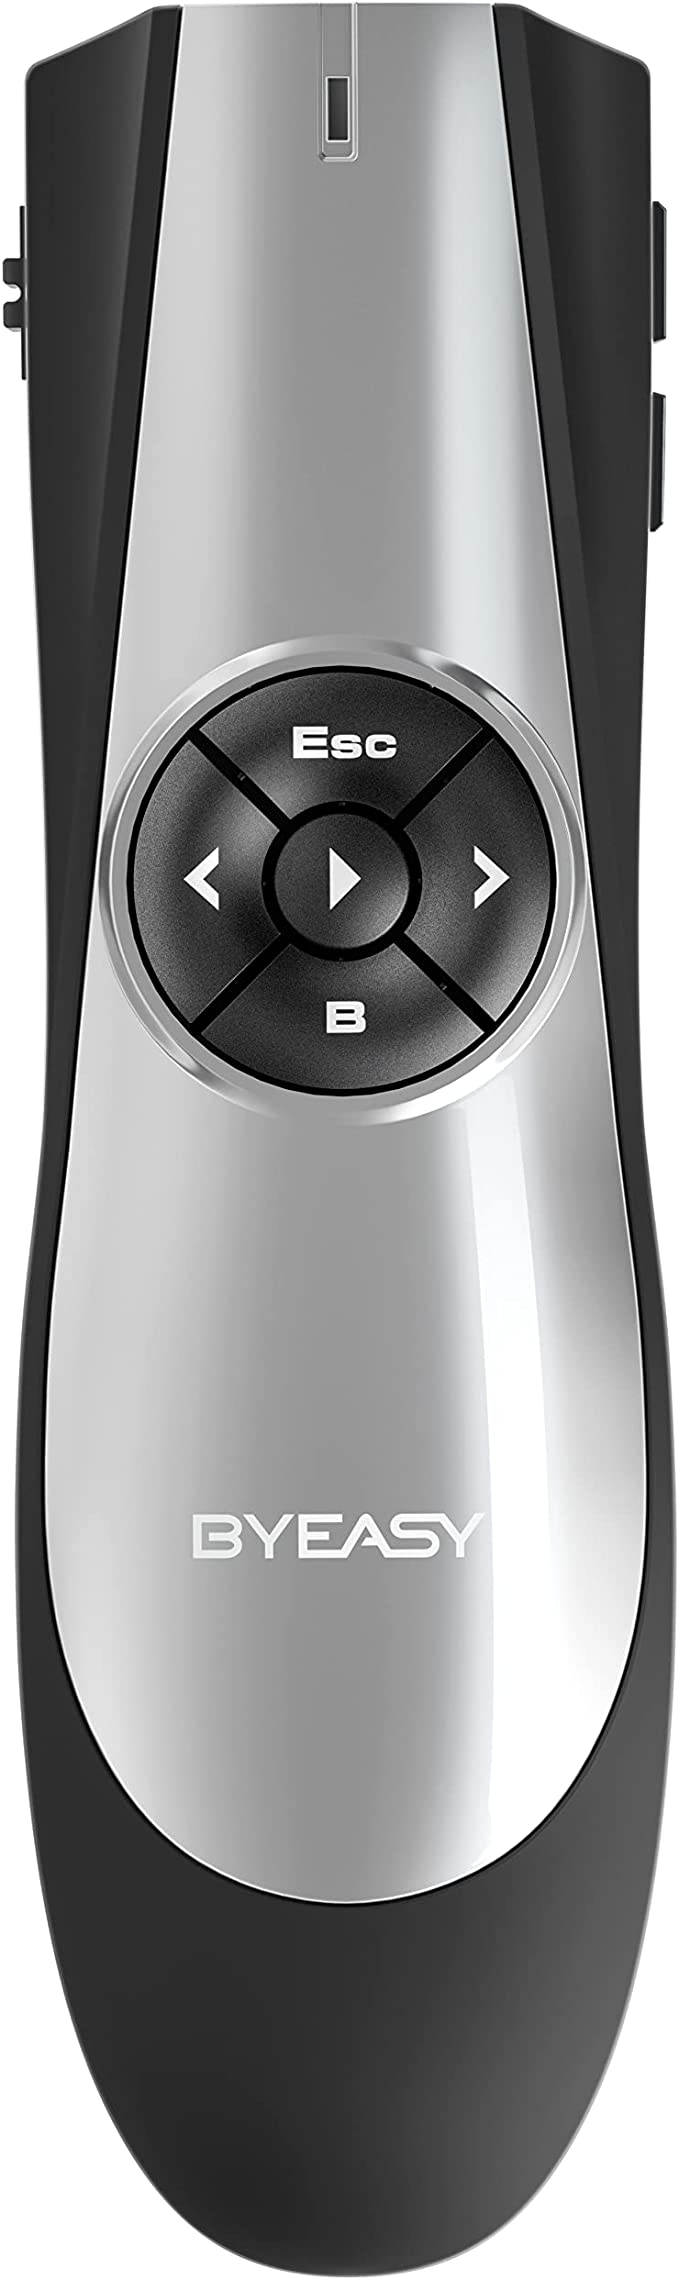 Wireless Presenter, BYEASY RF 2.4GHz Wireless Presenter Remote Presentation USB Control PowerPoint PPT Clicker with Red Laser Pointer, Volume Control for Google Slides- Black